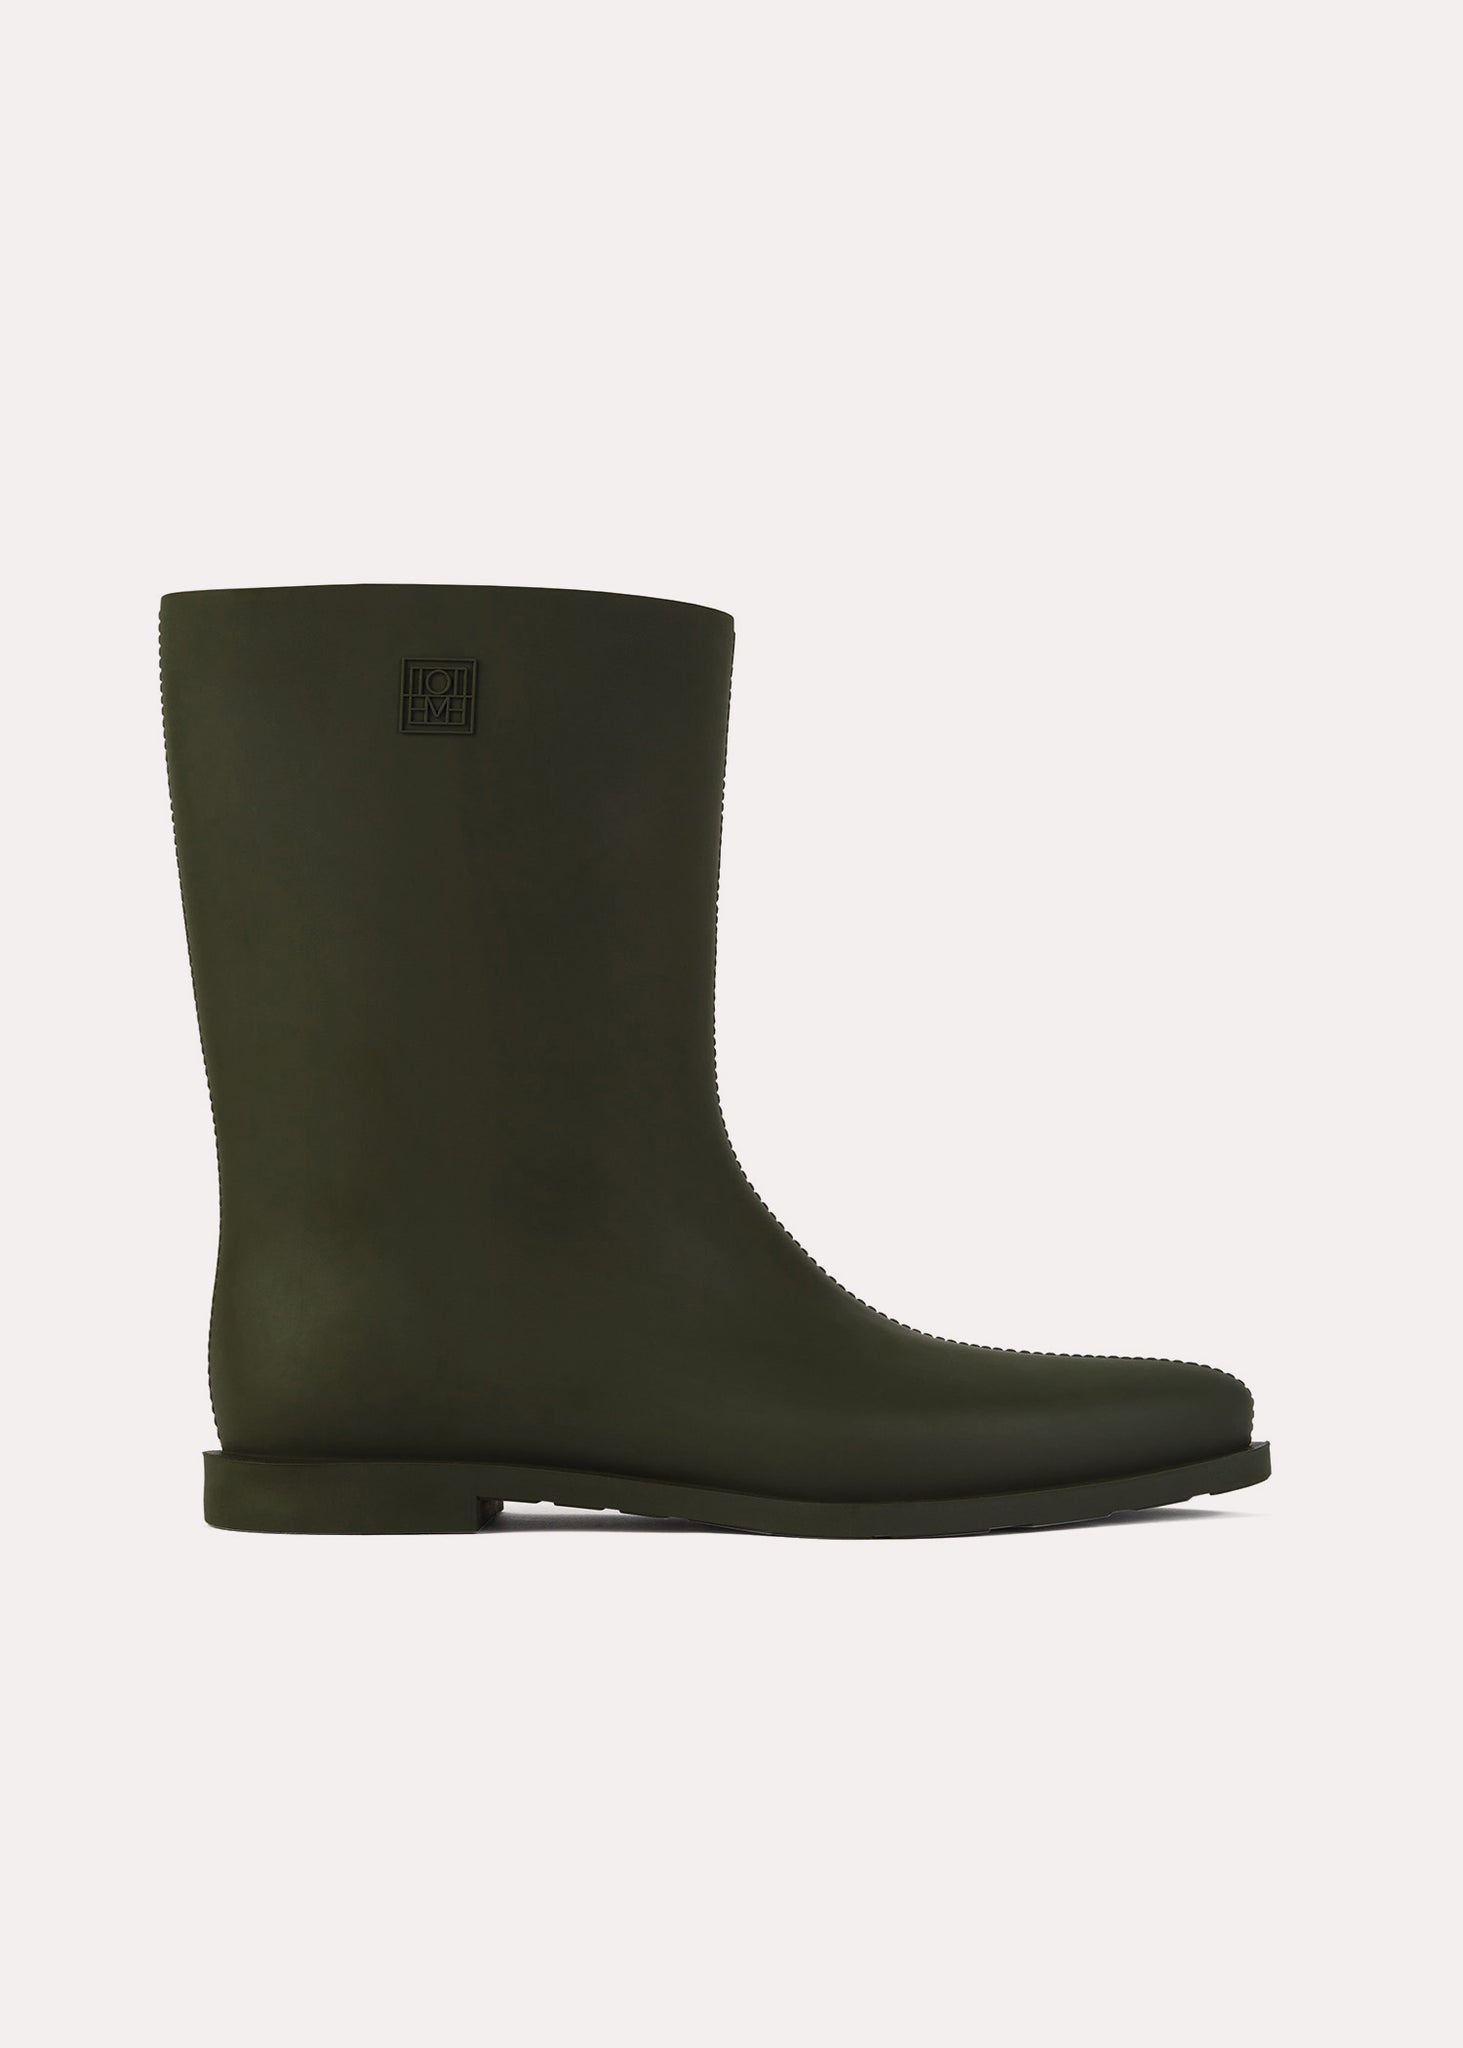 The Rain Boot khaki green